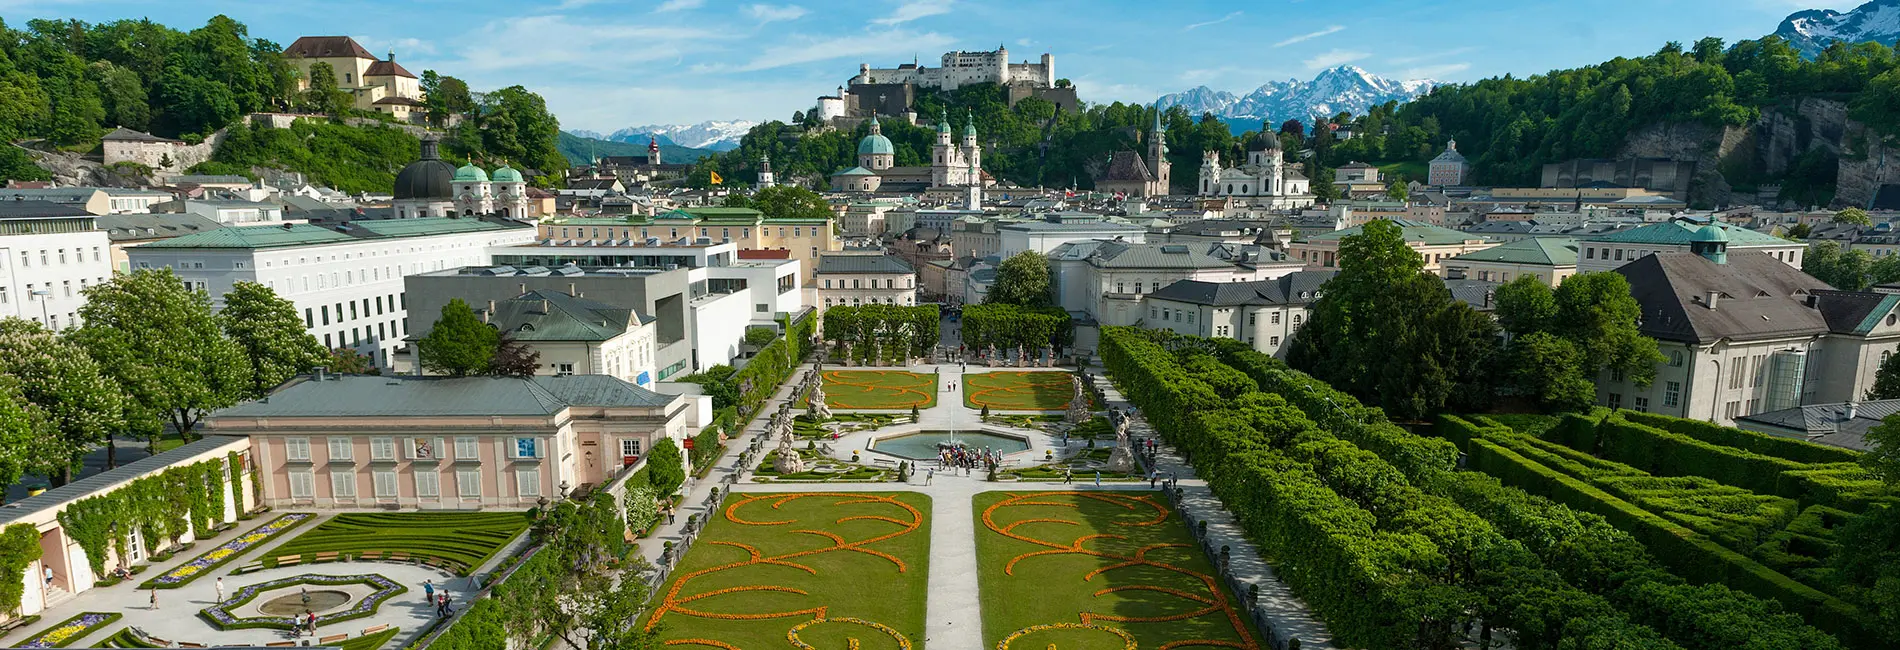 Salzburg Guide Tourismus - Mirabell